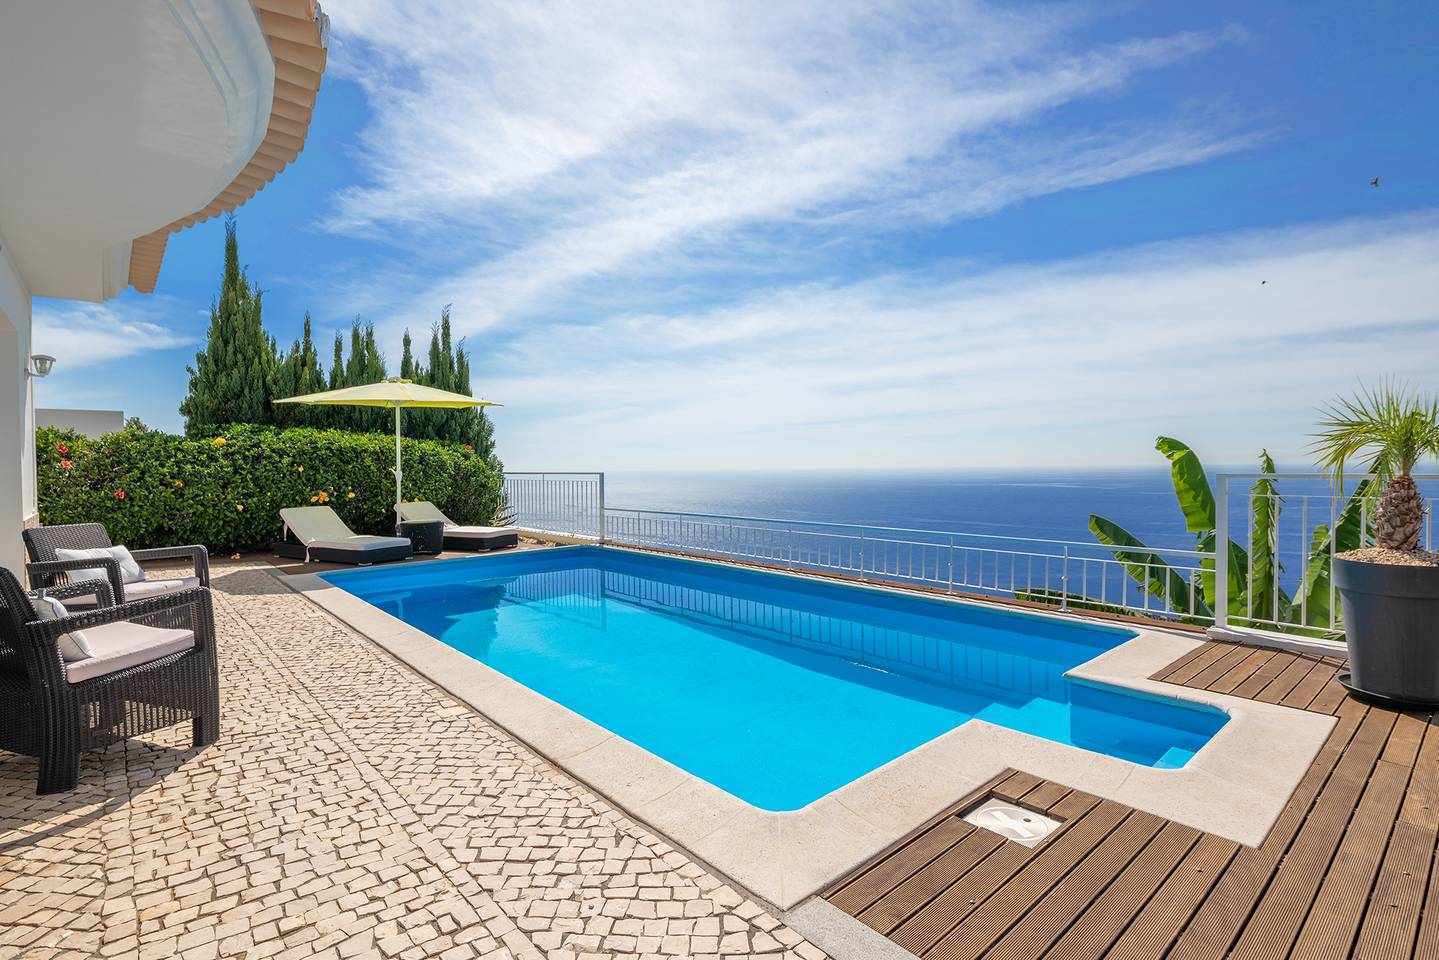 Villa Sophia - Villas for Rent in Ponta do Sol, Madeira, Portugal - Airbnb